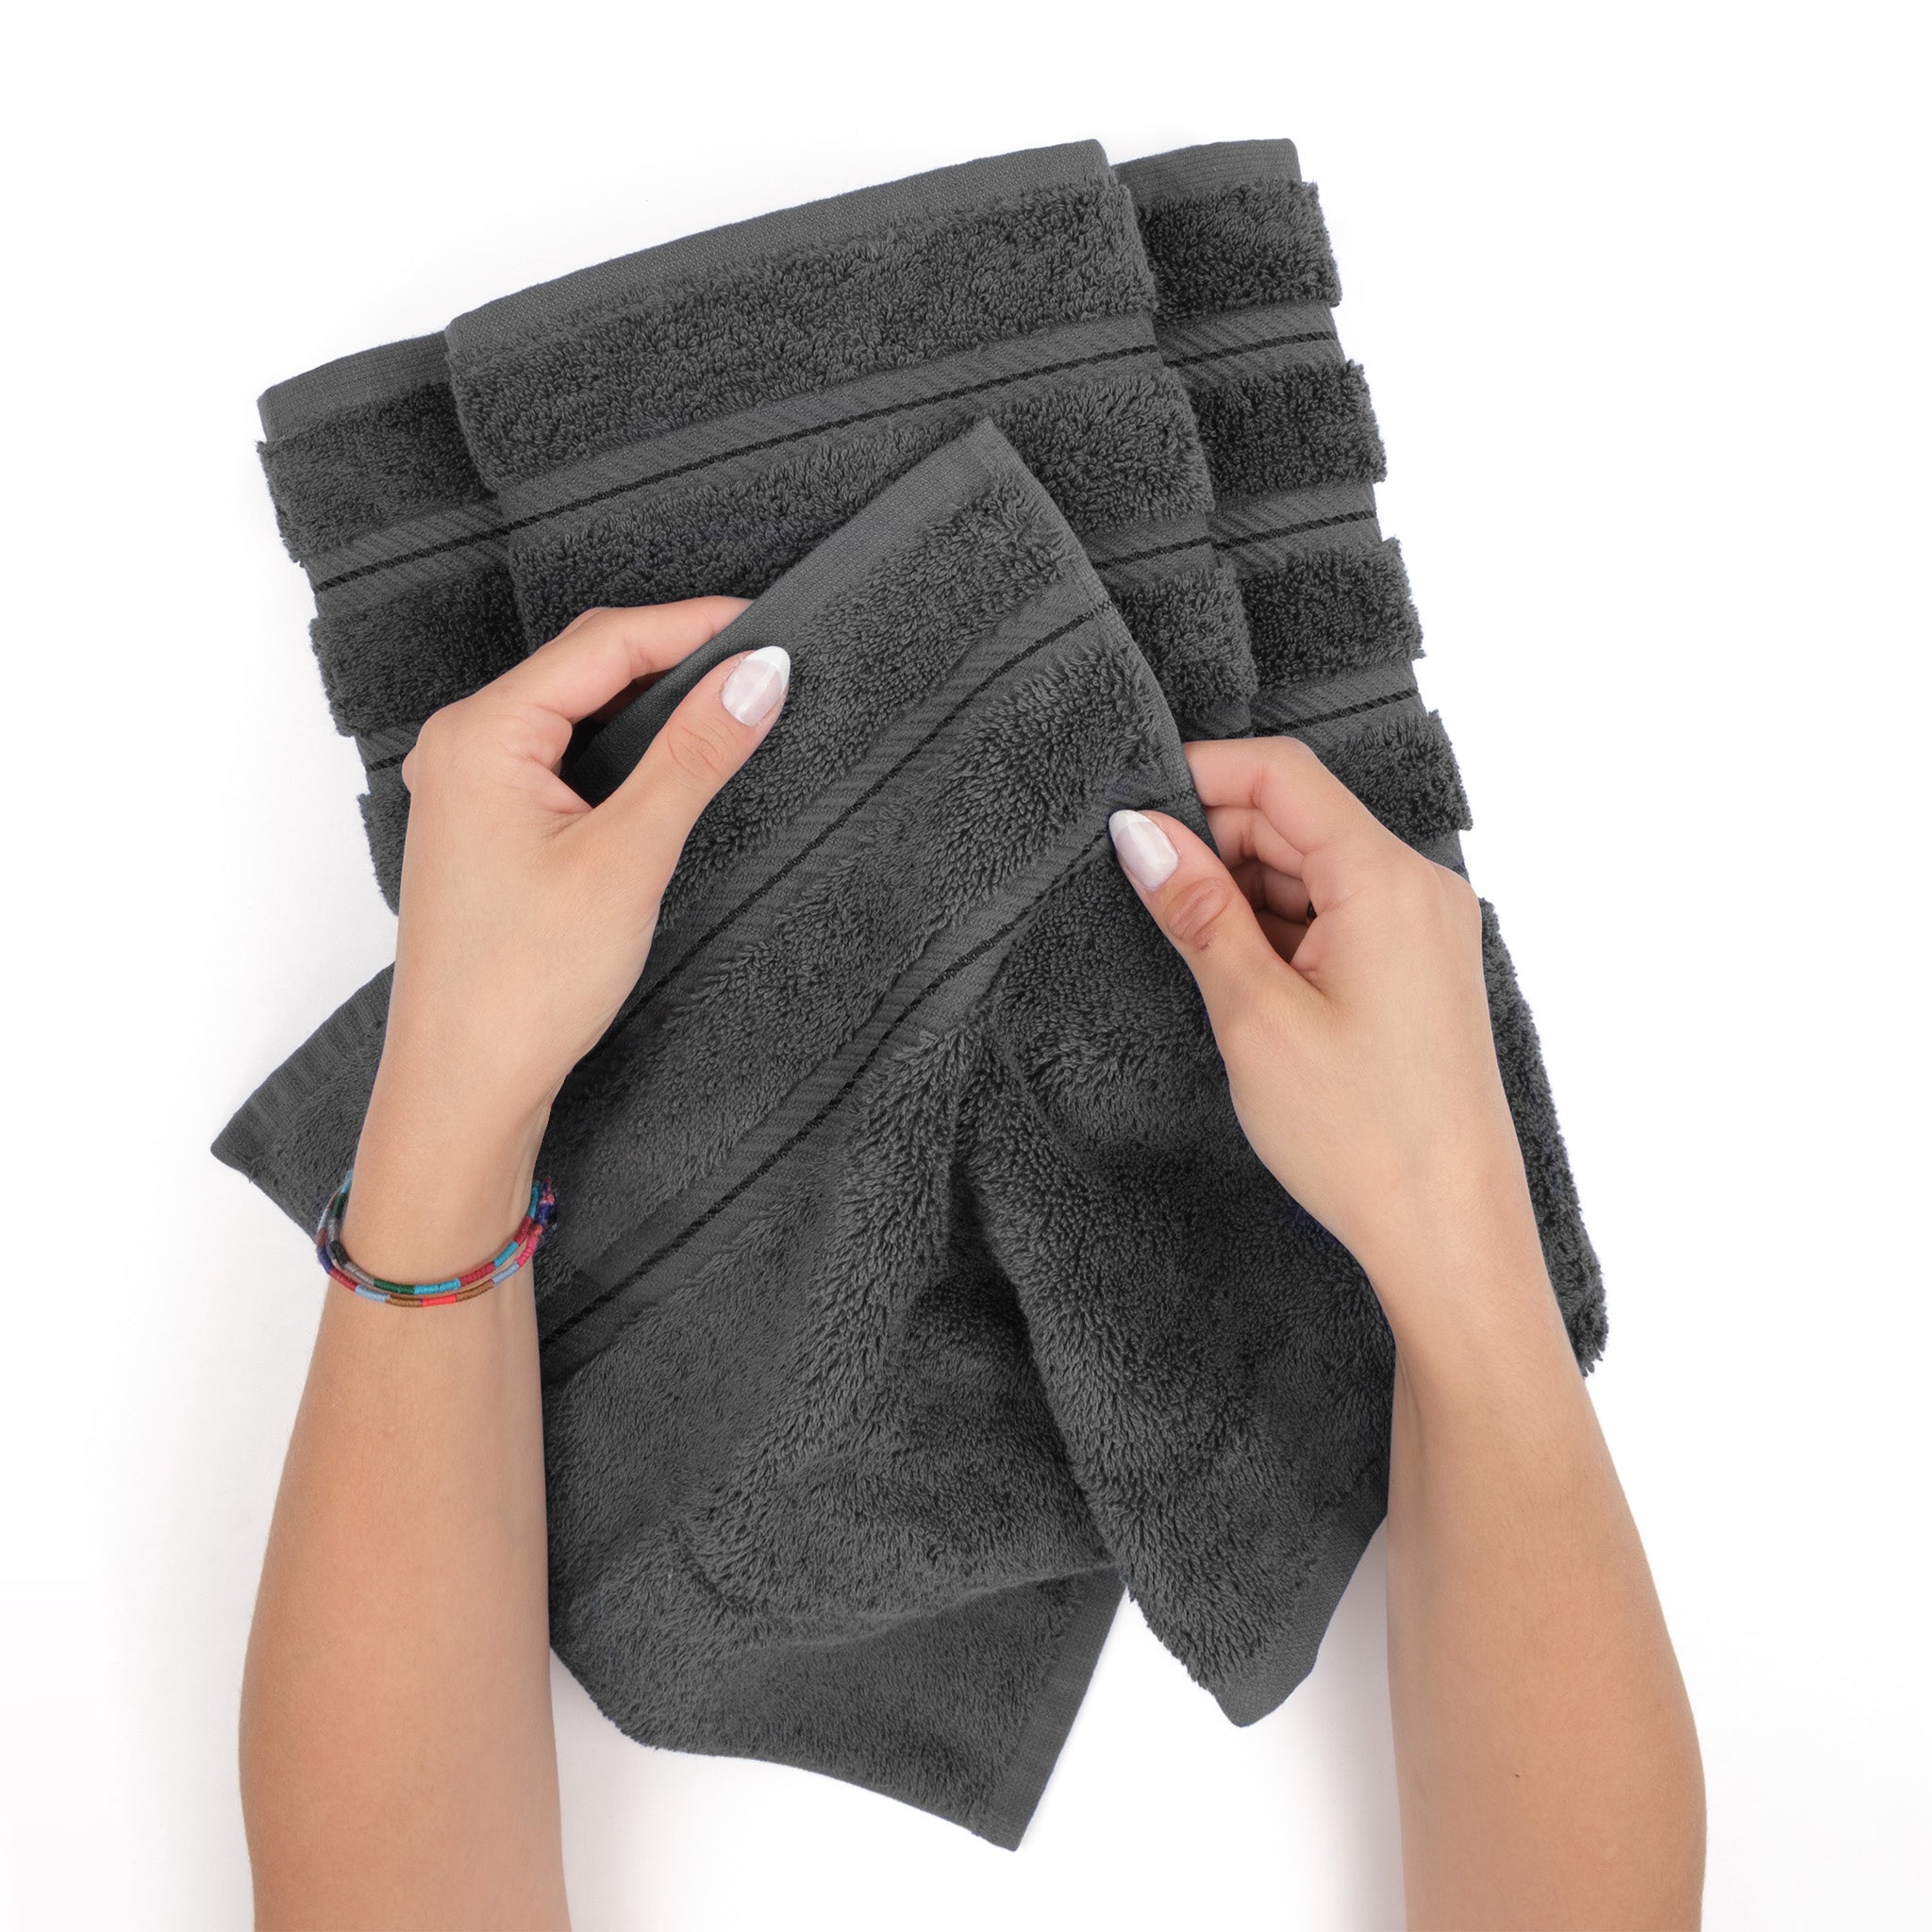 Dorlion Towels 4 Packed White Bath Towel Set, 100% Turkish Cotton Bath Towels, 27x54 inTurkish Bath Towel Set for Bathroom, Light Gray